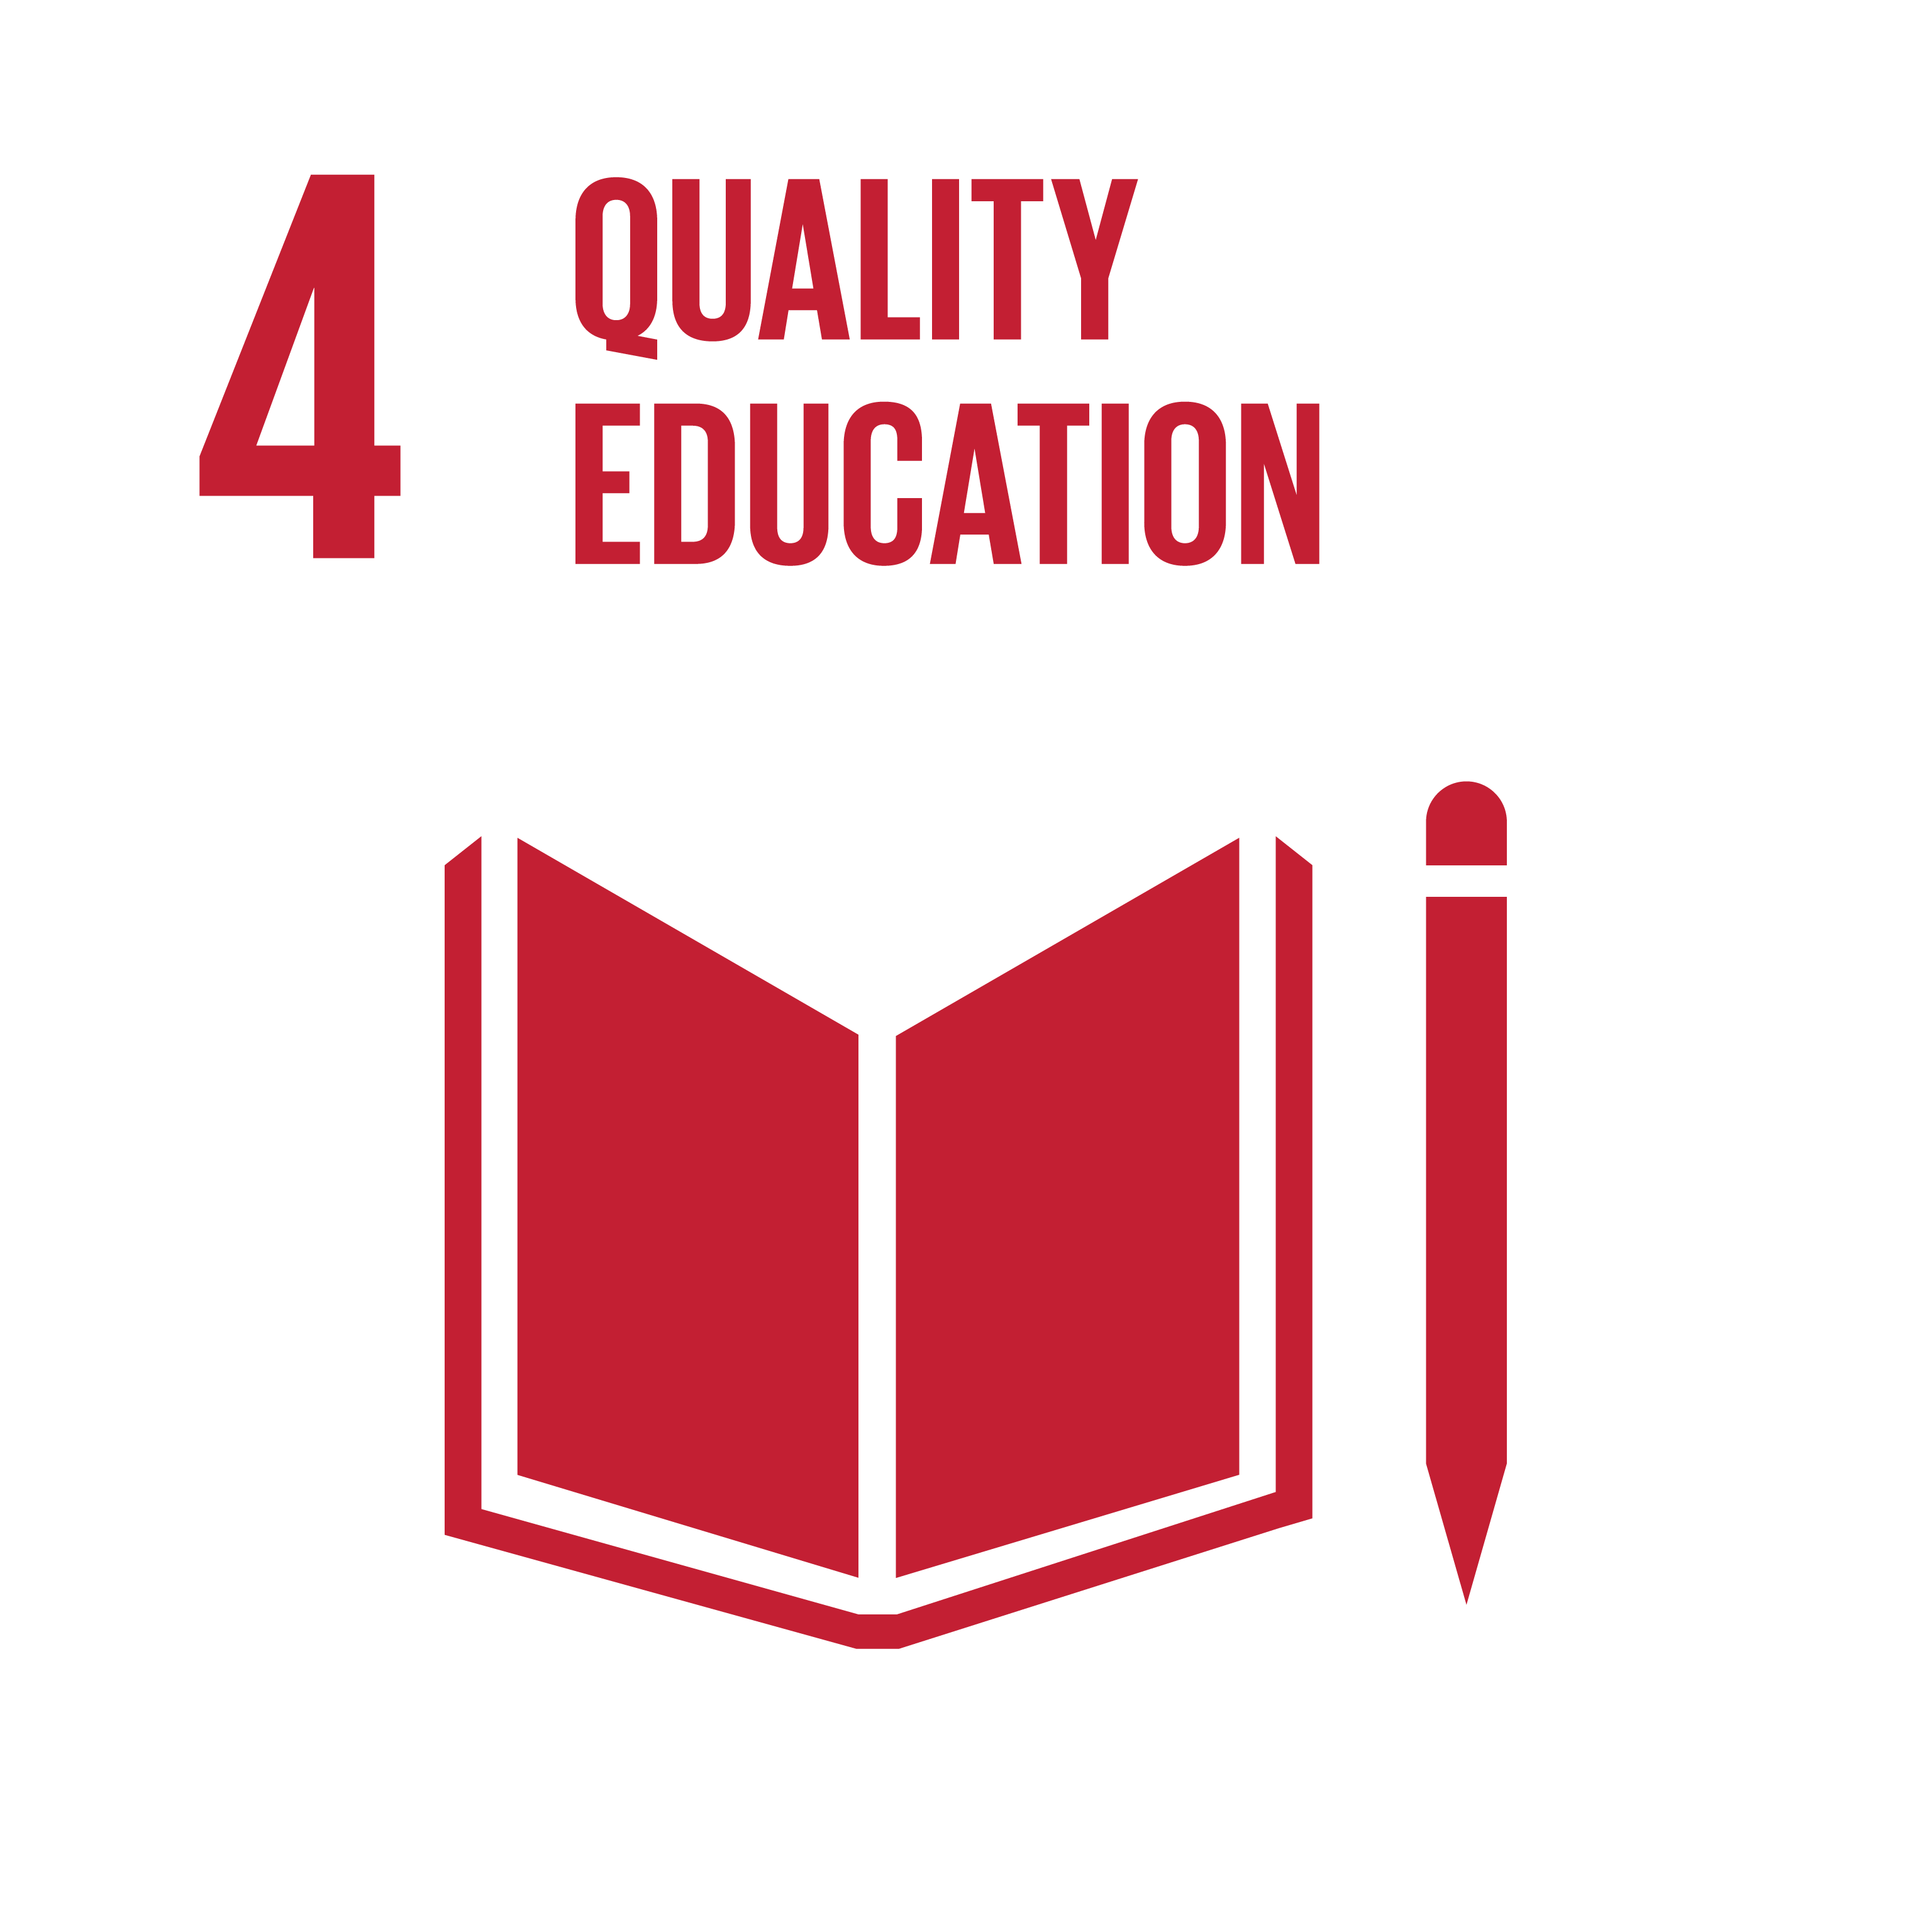 SDG04: Quality Education